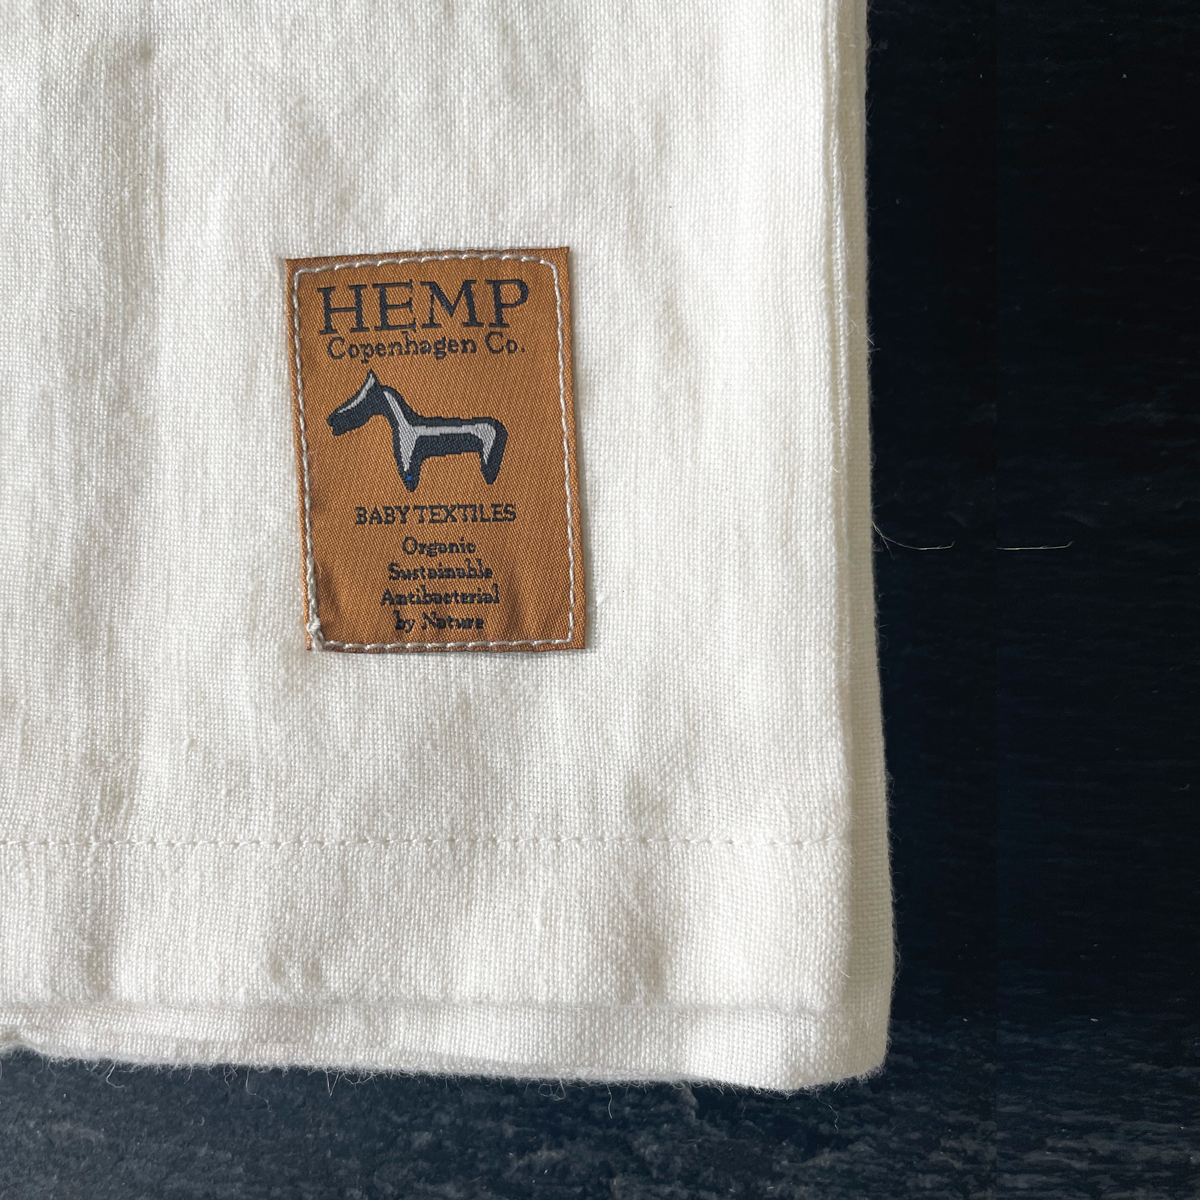 Hemp Copenhagen Co. Bed linen Baby 100% Hemp White or Natural Grey